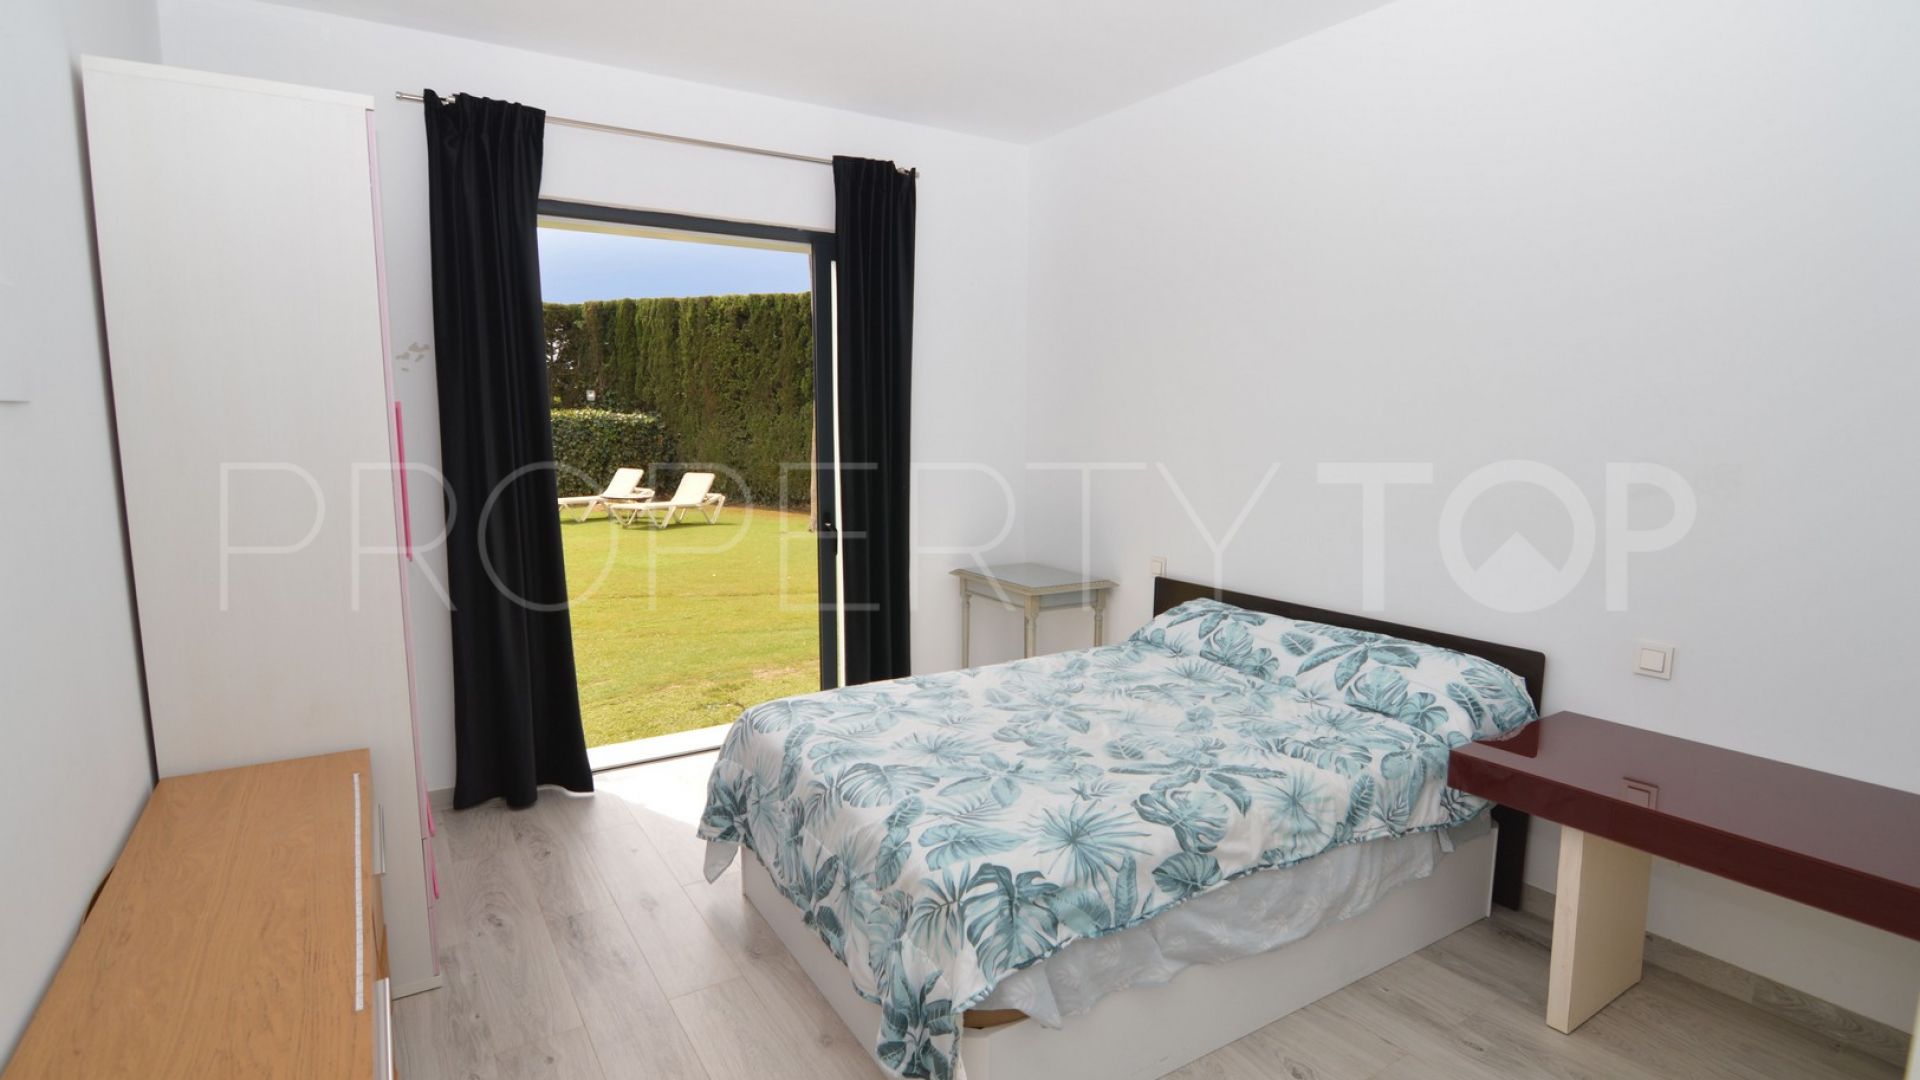 4 bedrooms house for sale in San Martin del Tesorillo